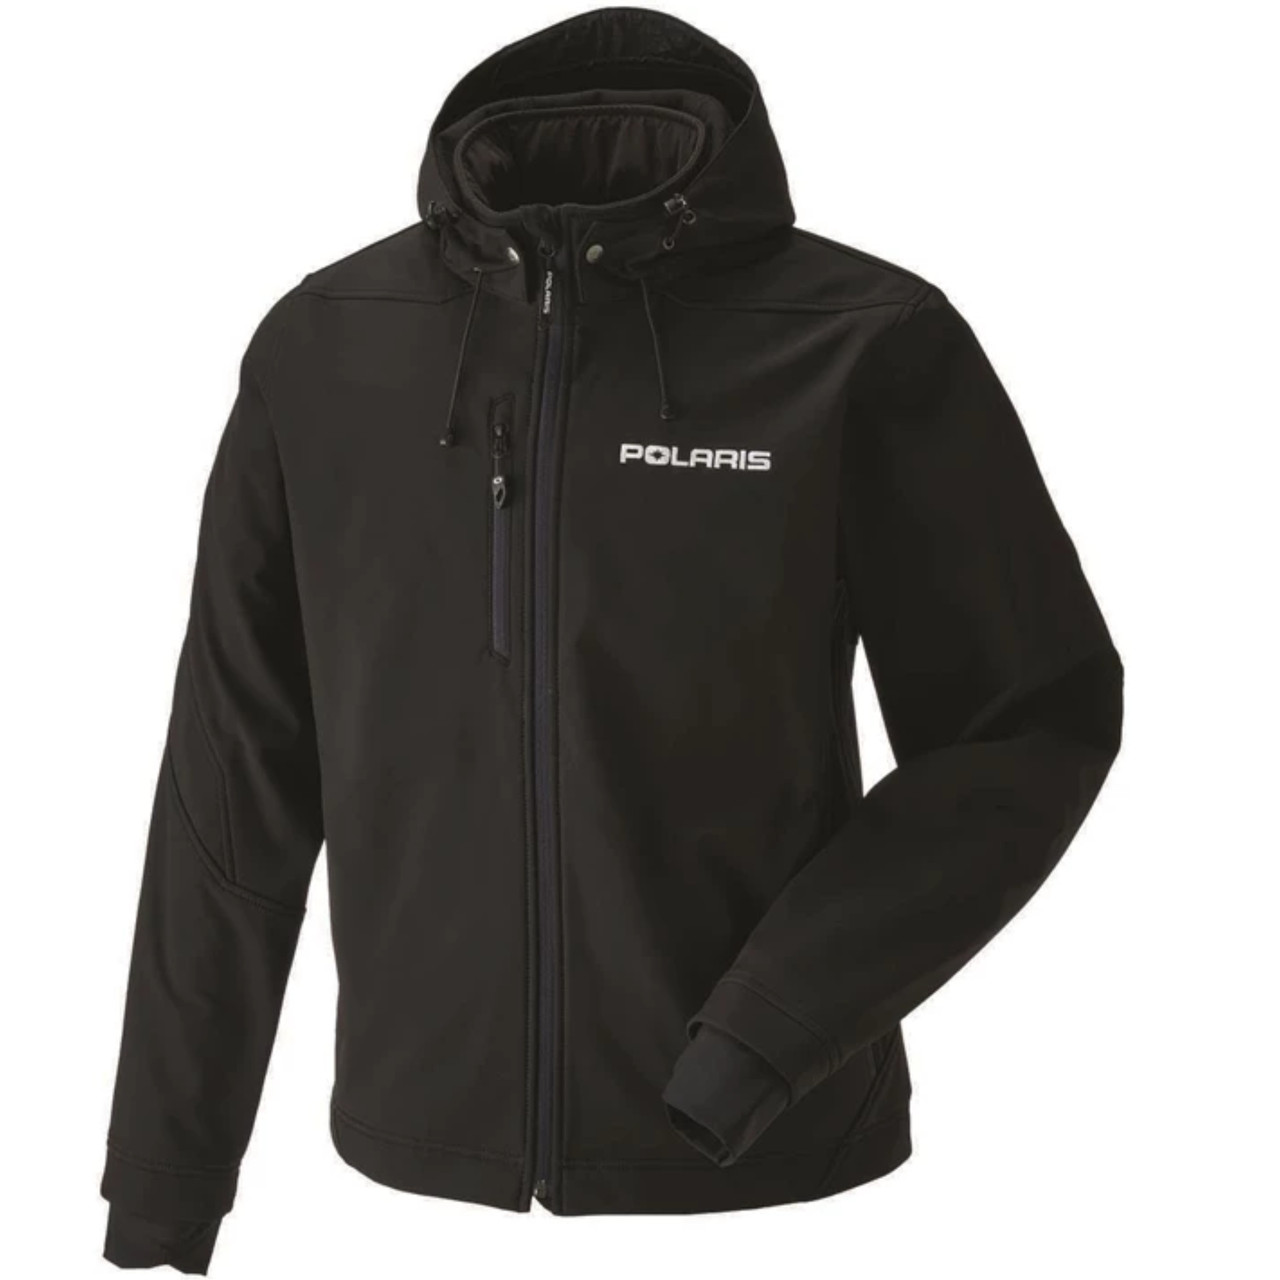 Polaris new OEM Softshell Jacket with White Logo, Men's Small, 286991802